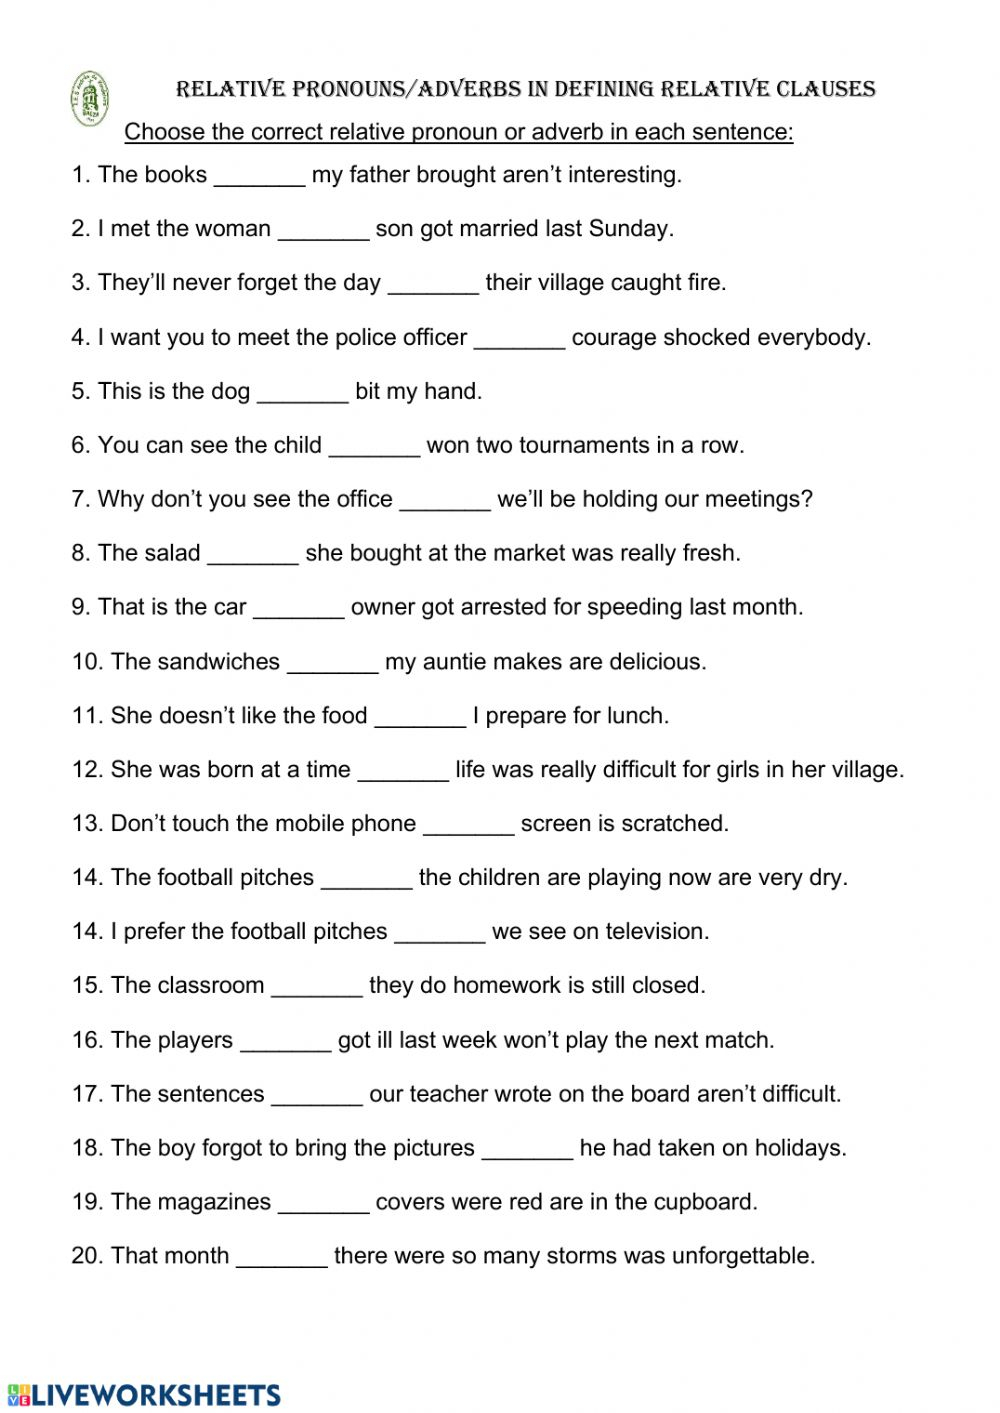 Relative Pronouns Adverbs Worksheet